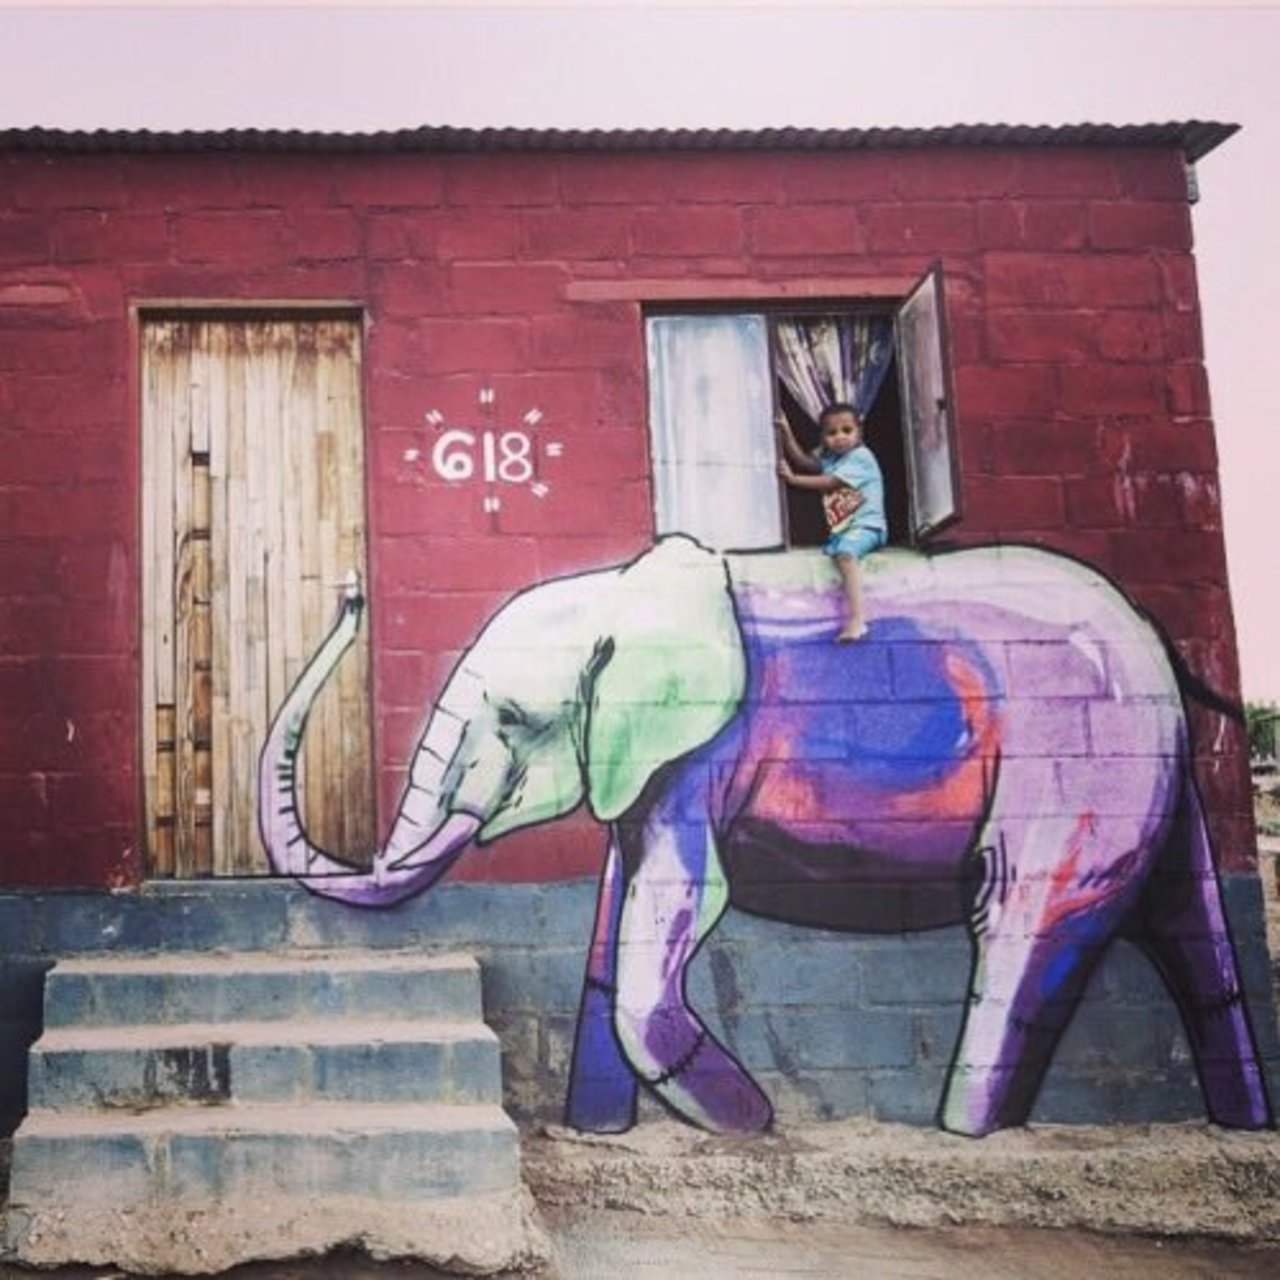 Good idea  #art #streetart #streetartistanbul #wallart #mural #graffiti #graffitiigers #elephant #618 https://t.co/twSD5rEtgj